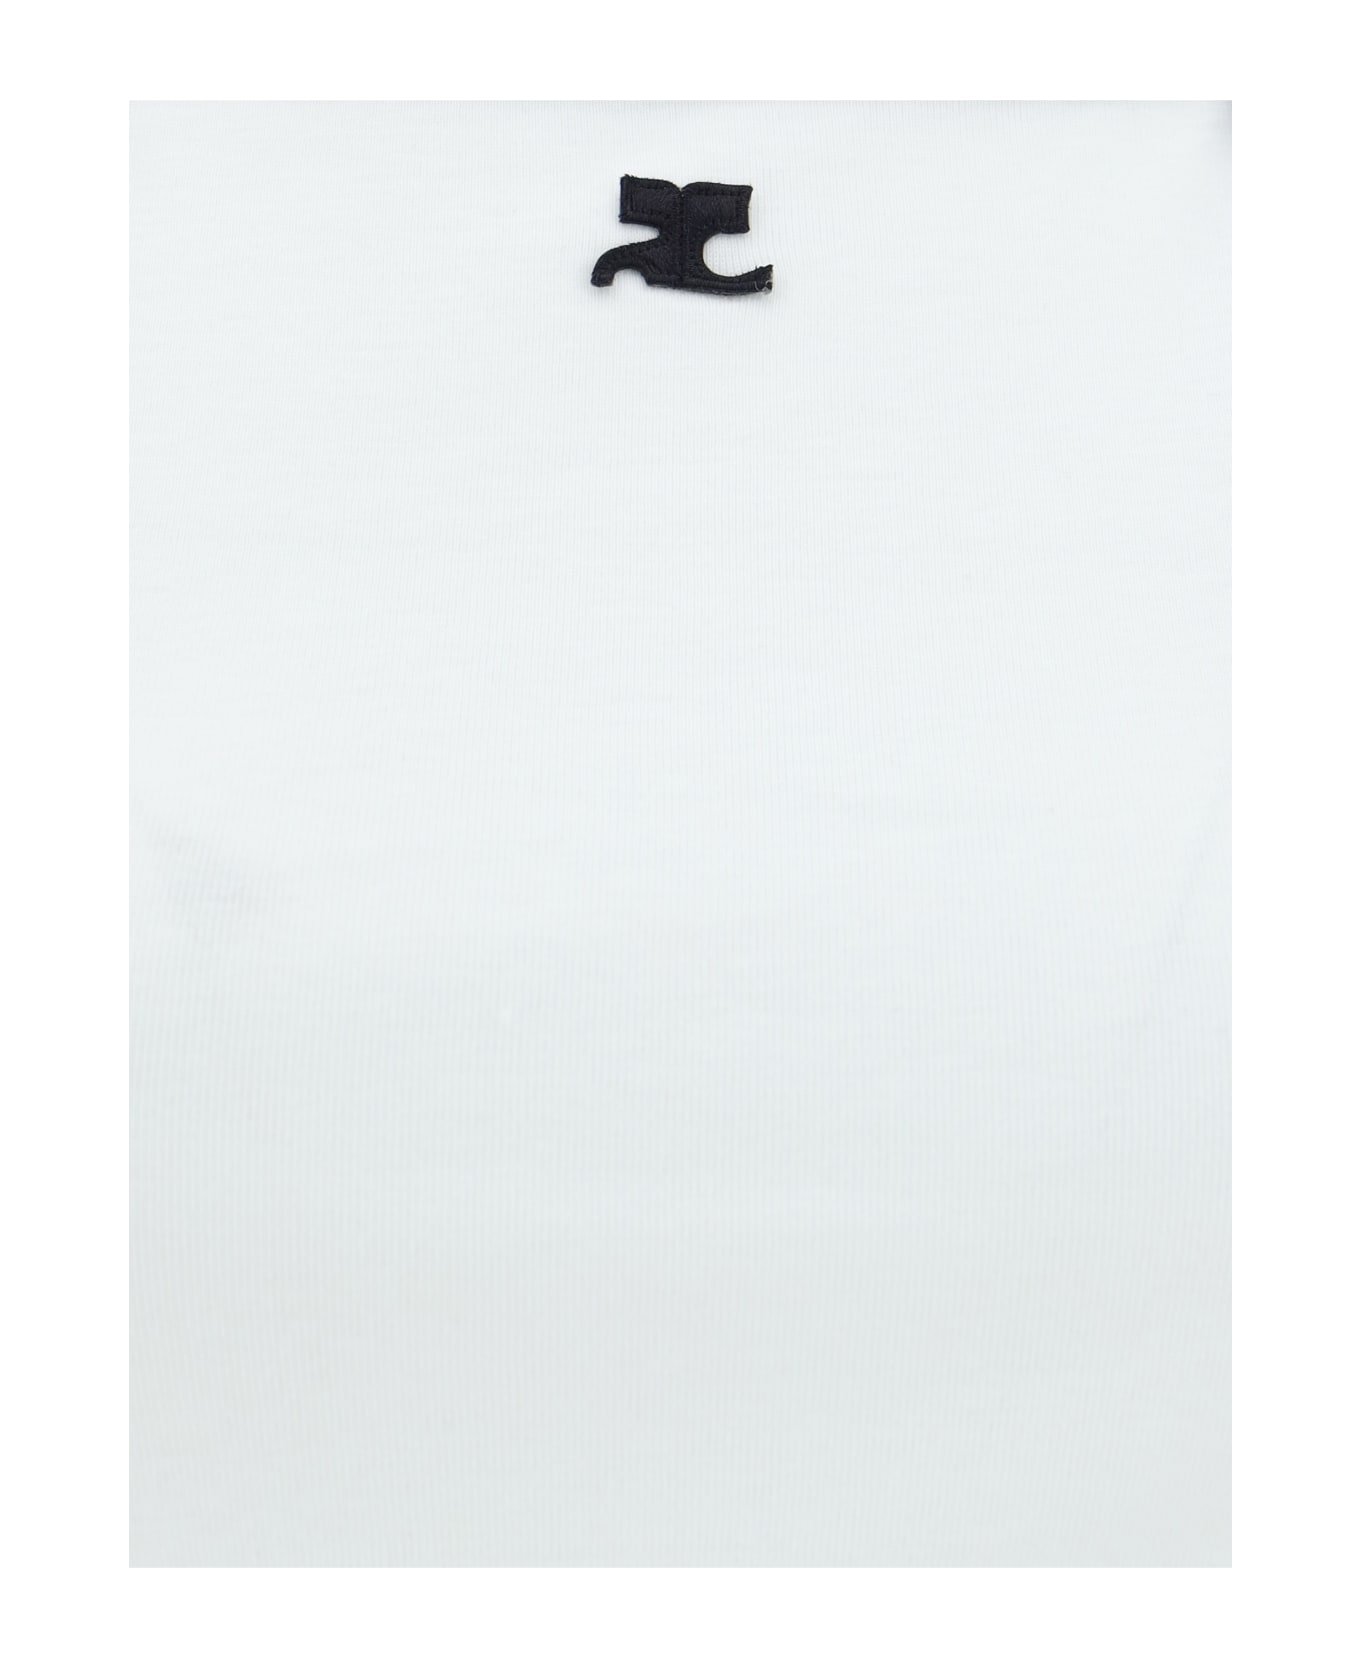 Courrèges Mini Dress - 0098 HERITAGE WHITE/BLACK  ワンピース＆ドレス